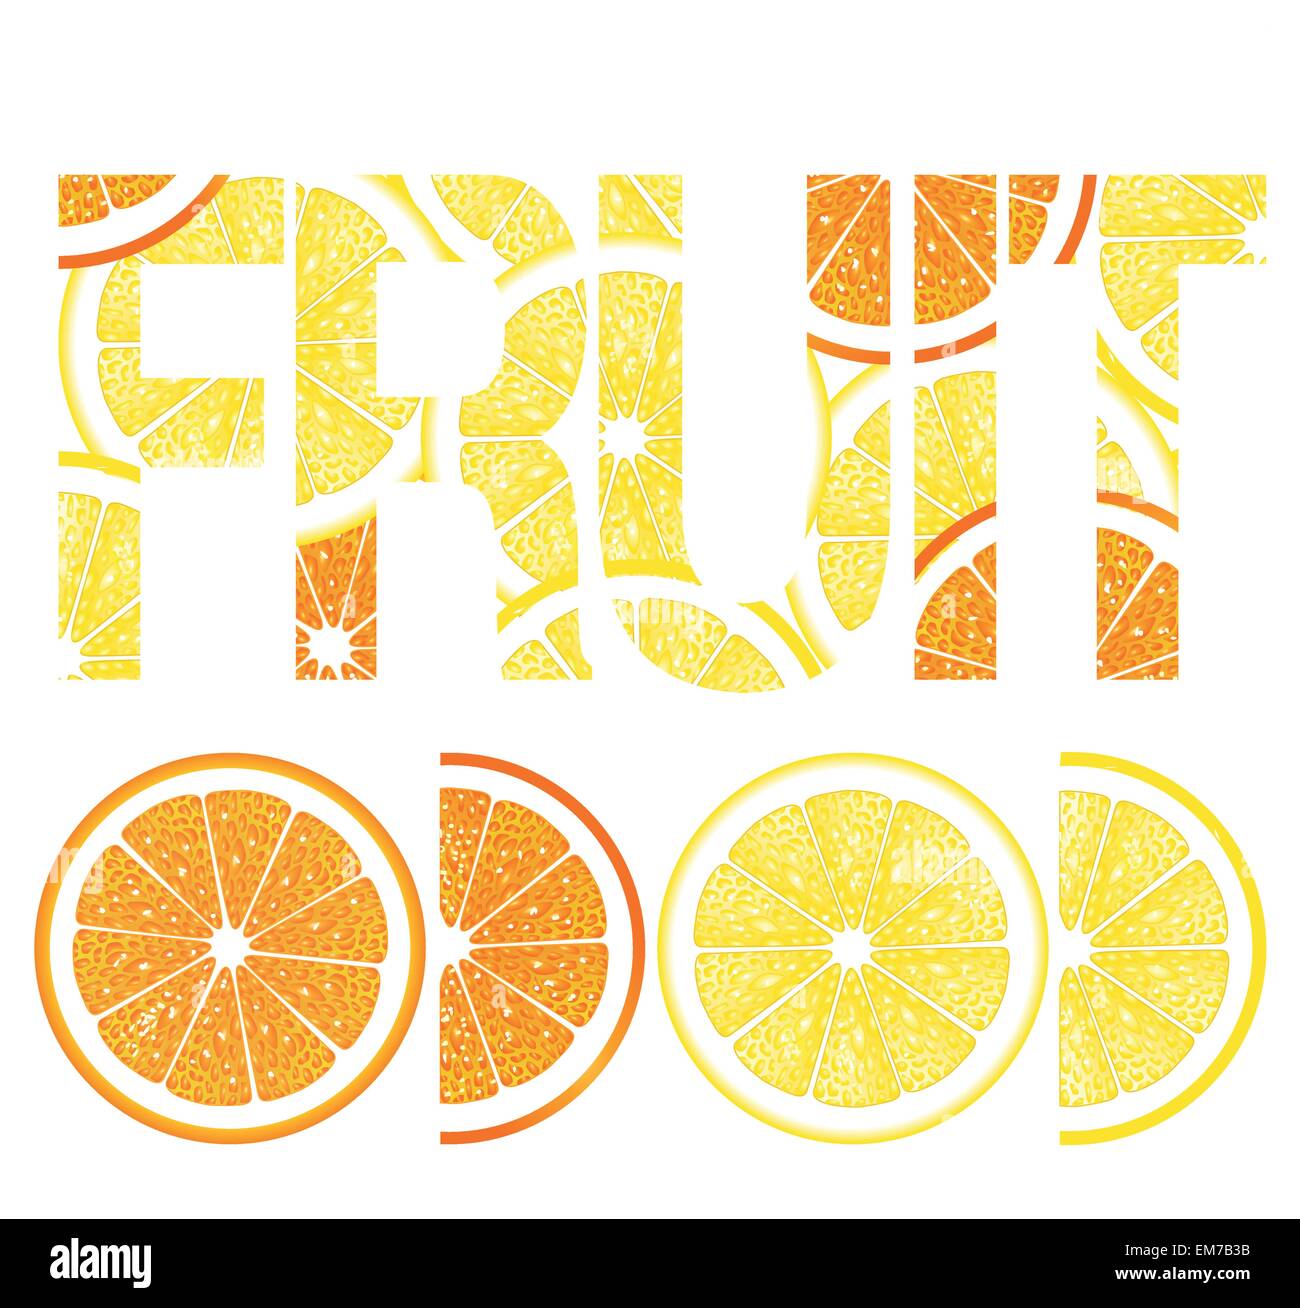 Citrus fruits , lemons and oranges Stock Vector